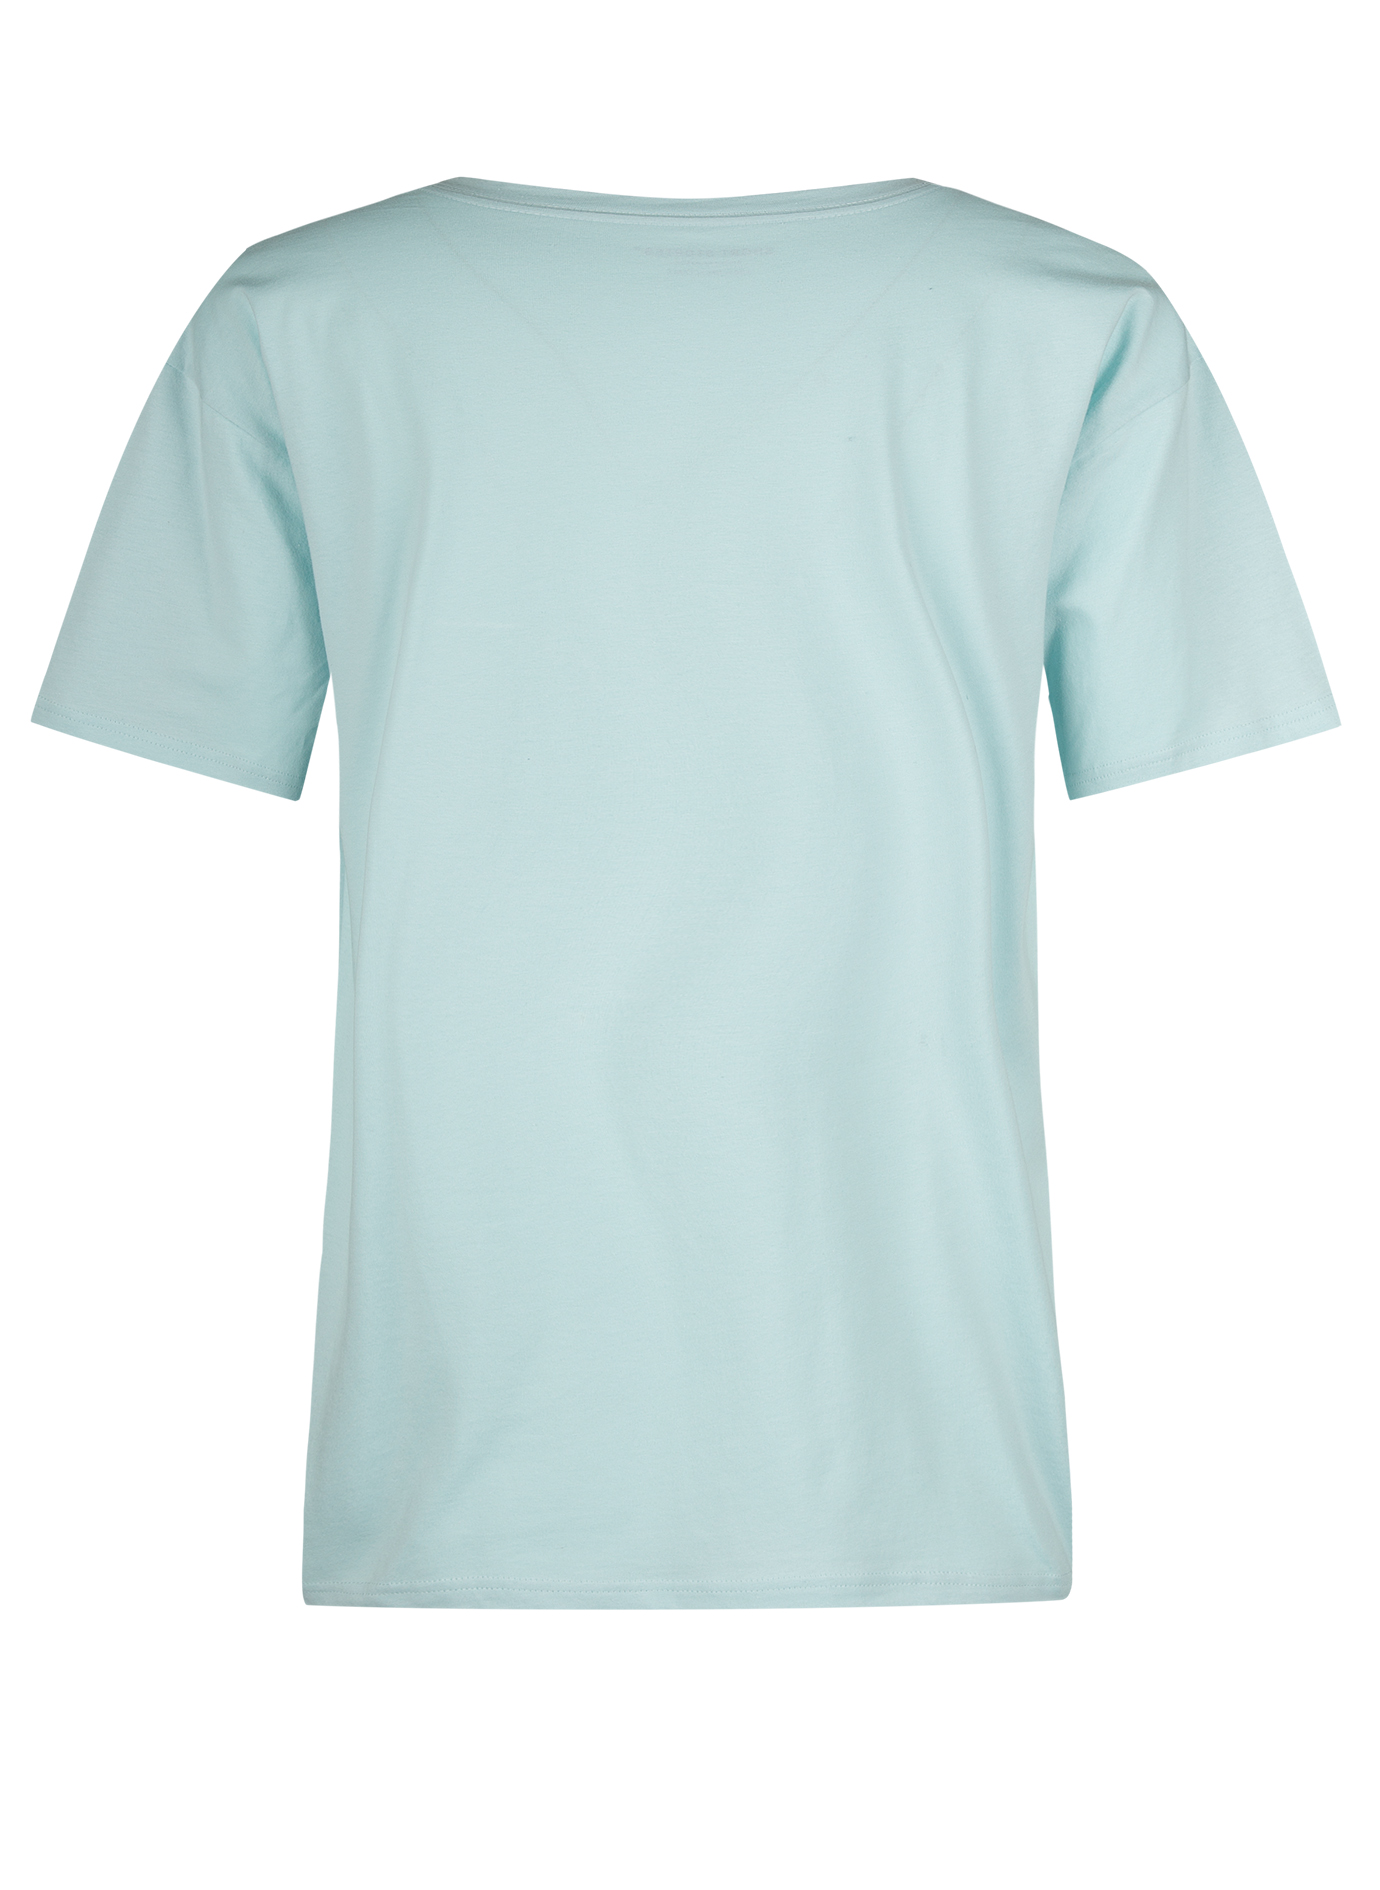 Damen T-Shirt Hellblau